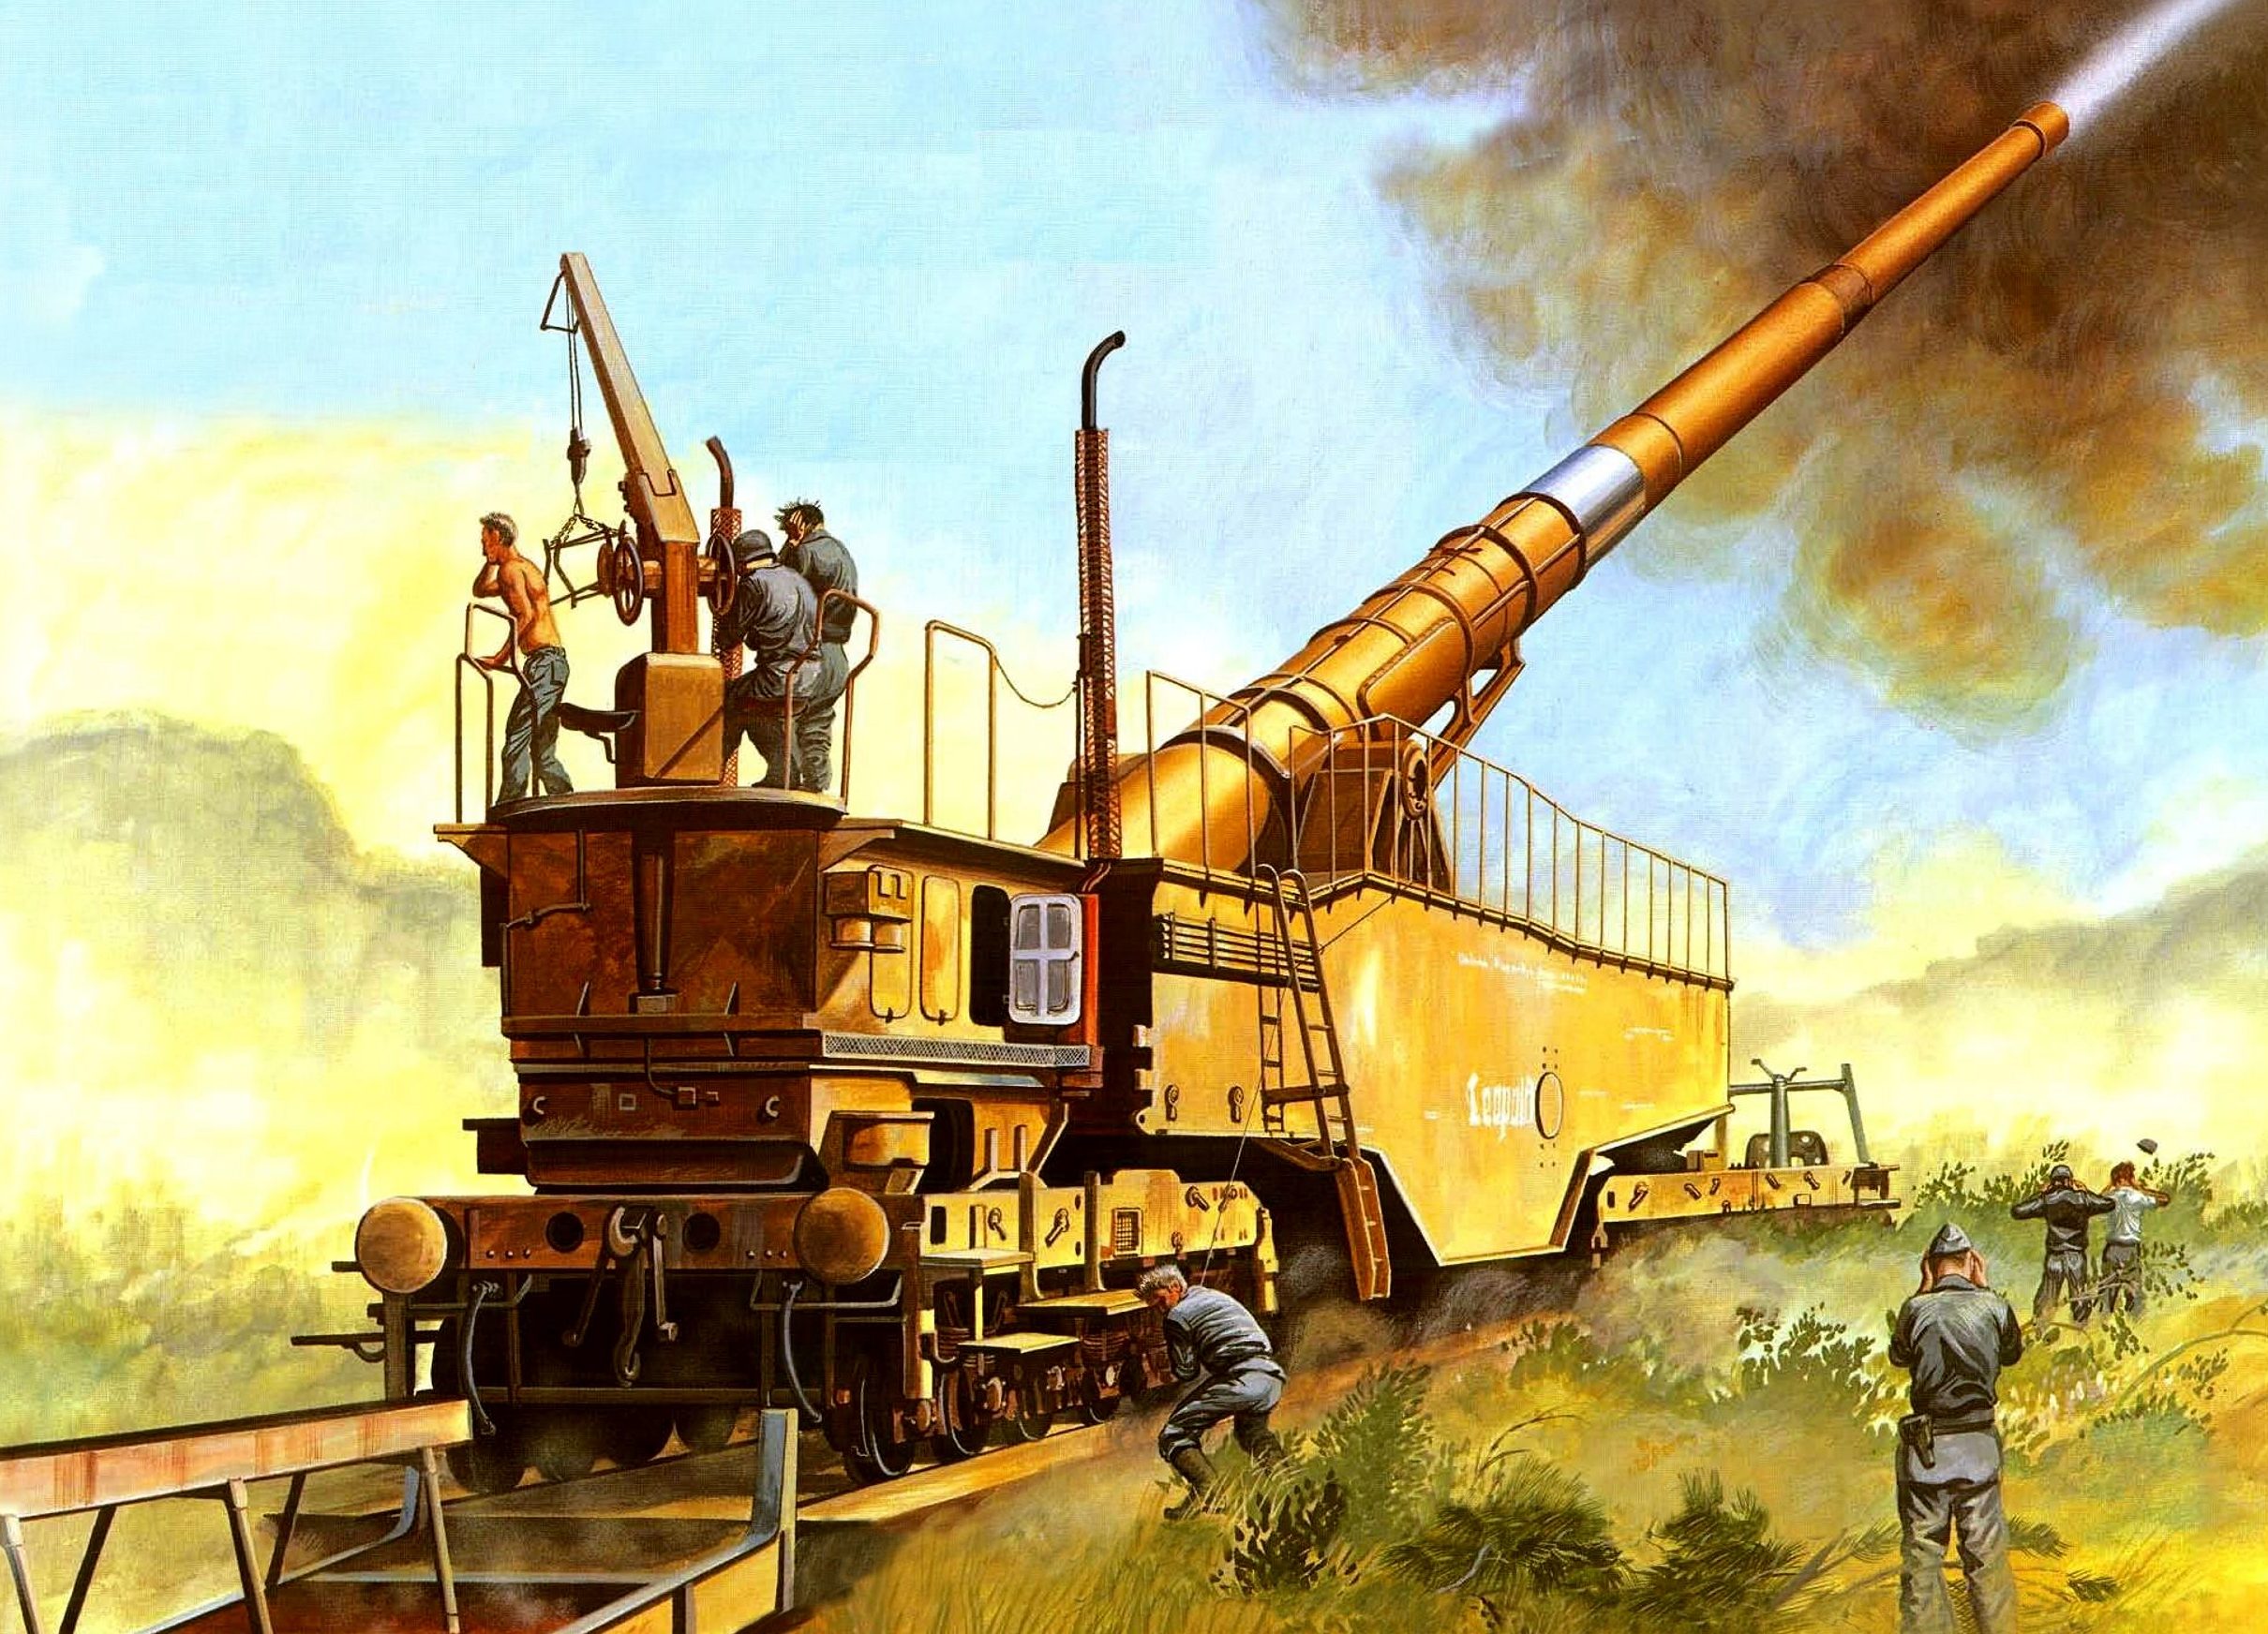 Greer Don. Железнодорожное 28-cm орудие K5(E) Leopold.